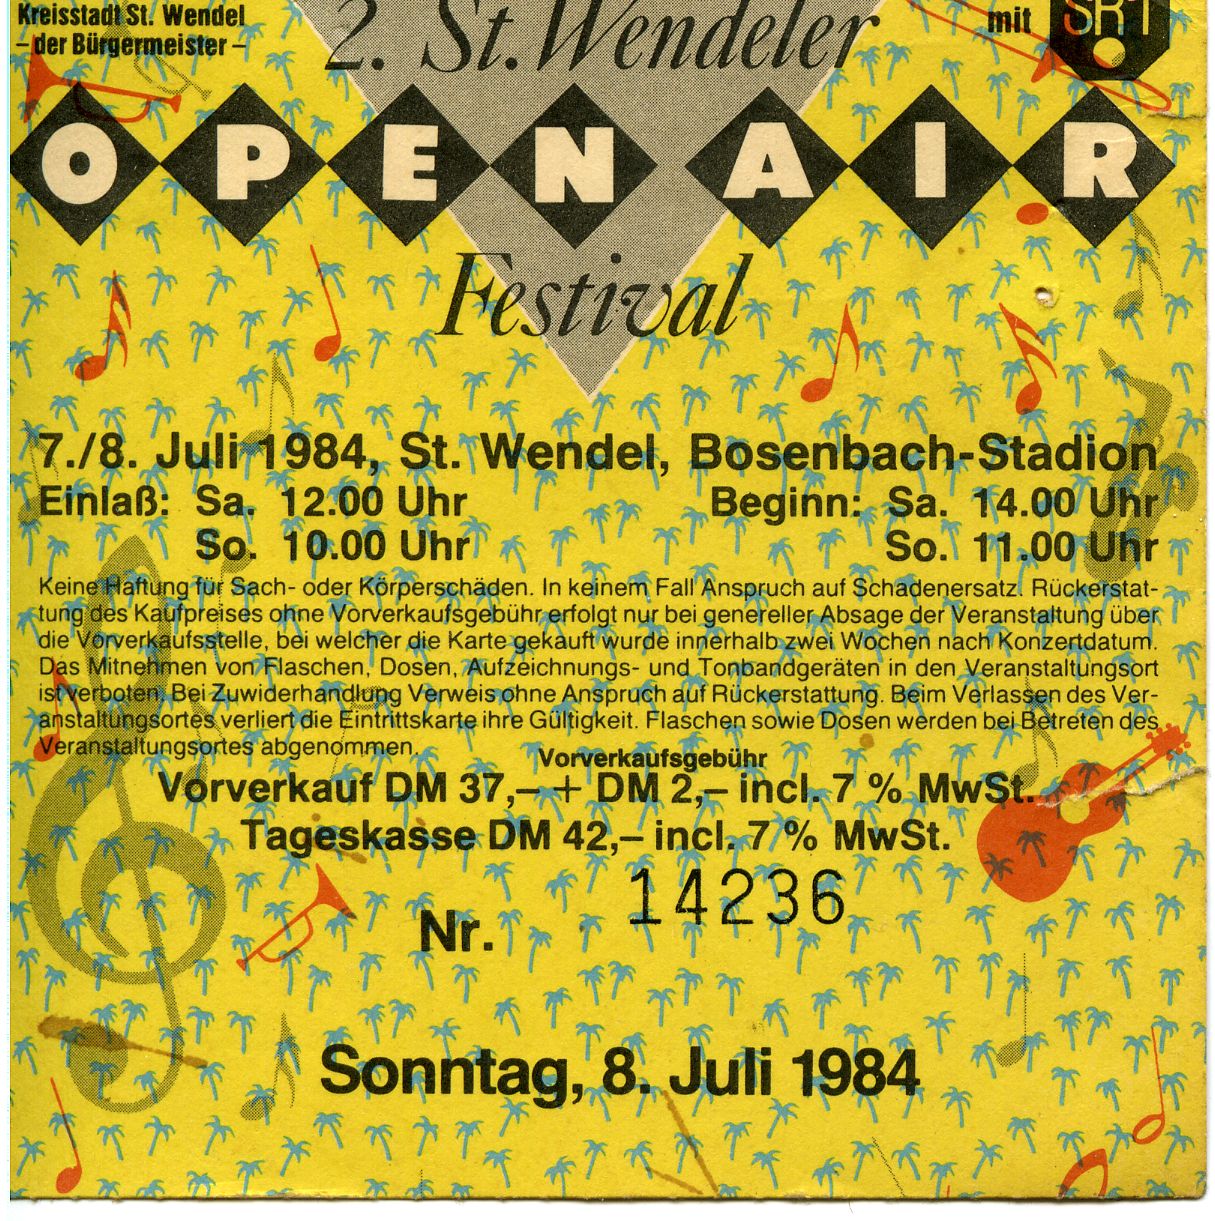 St Wendel Open Air 1984 ticket.jpg